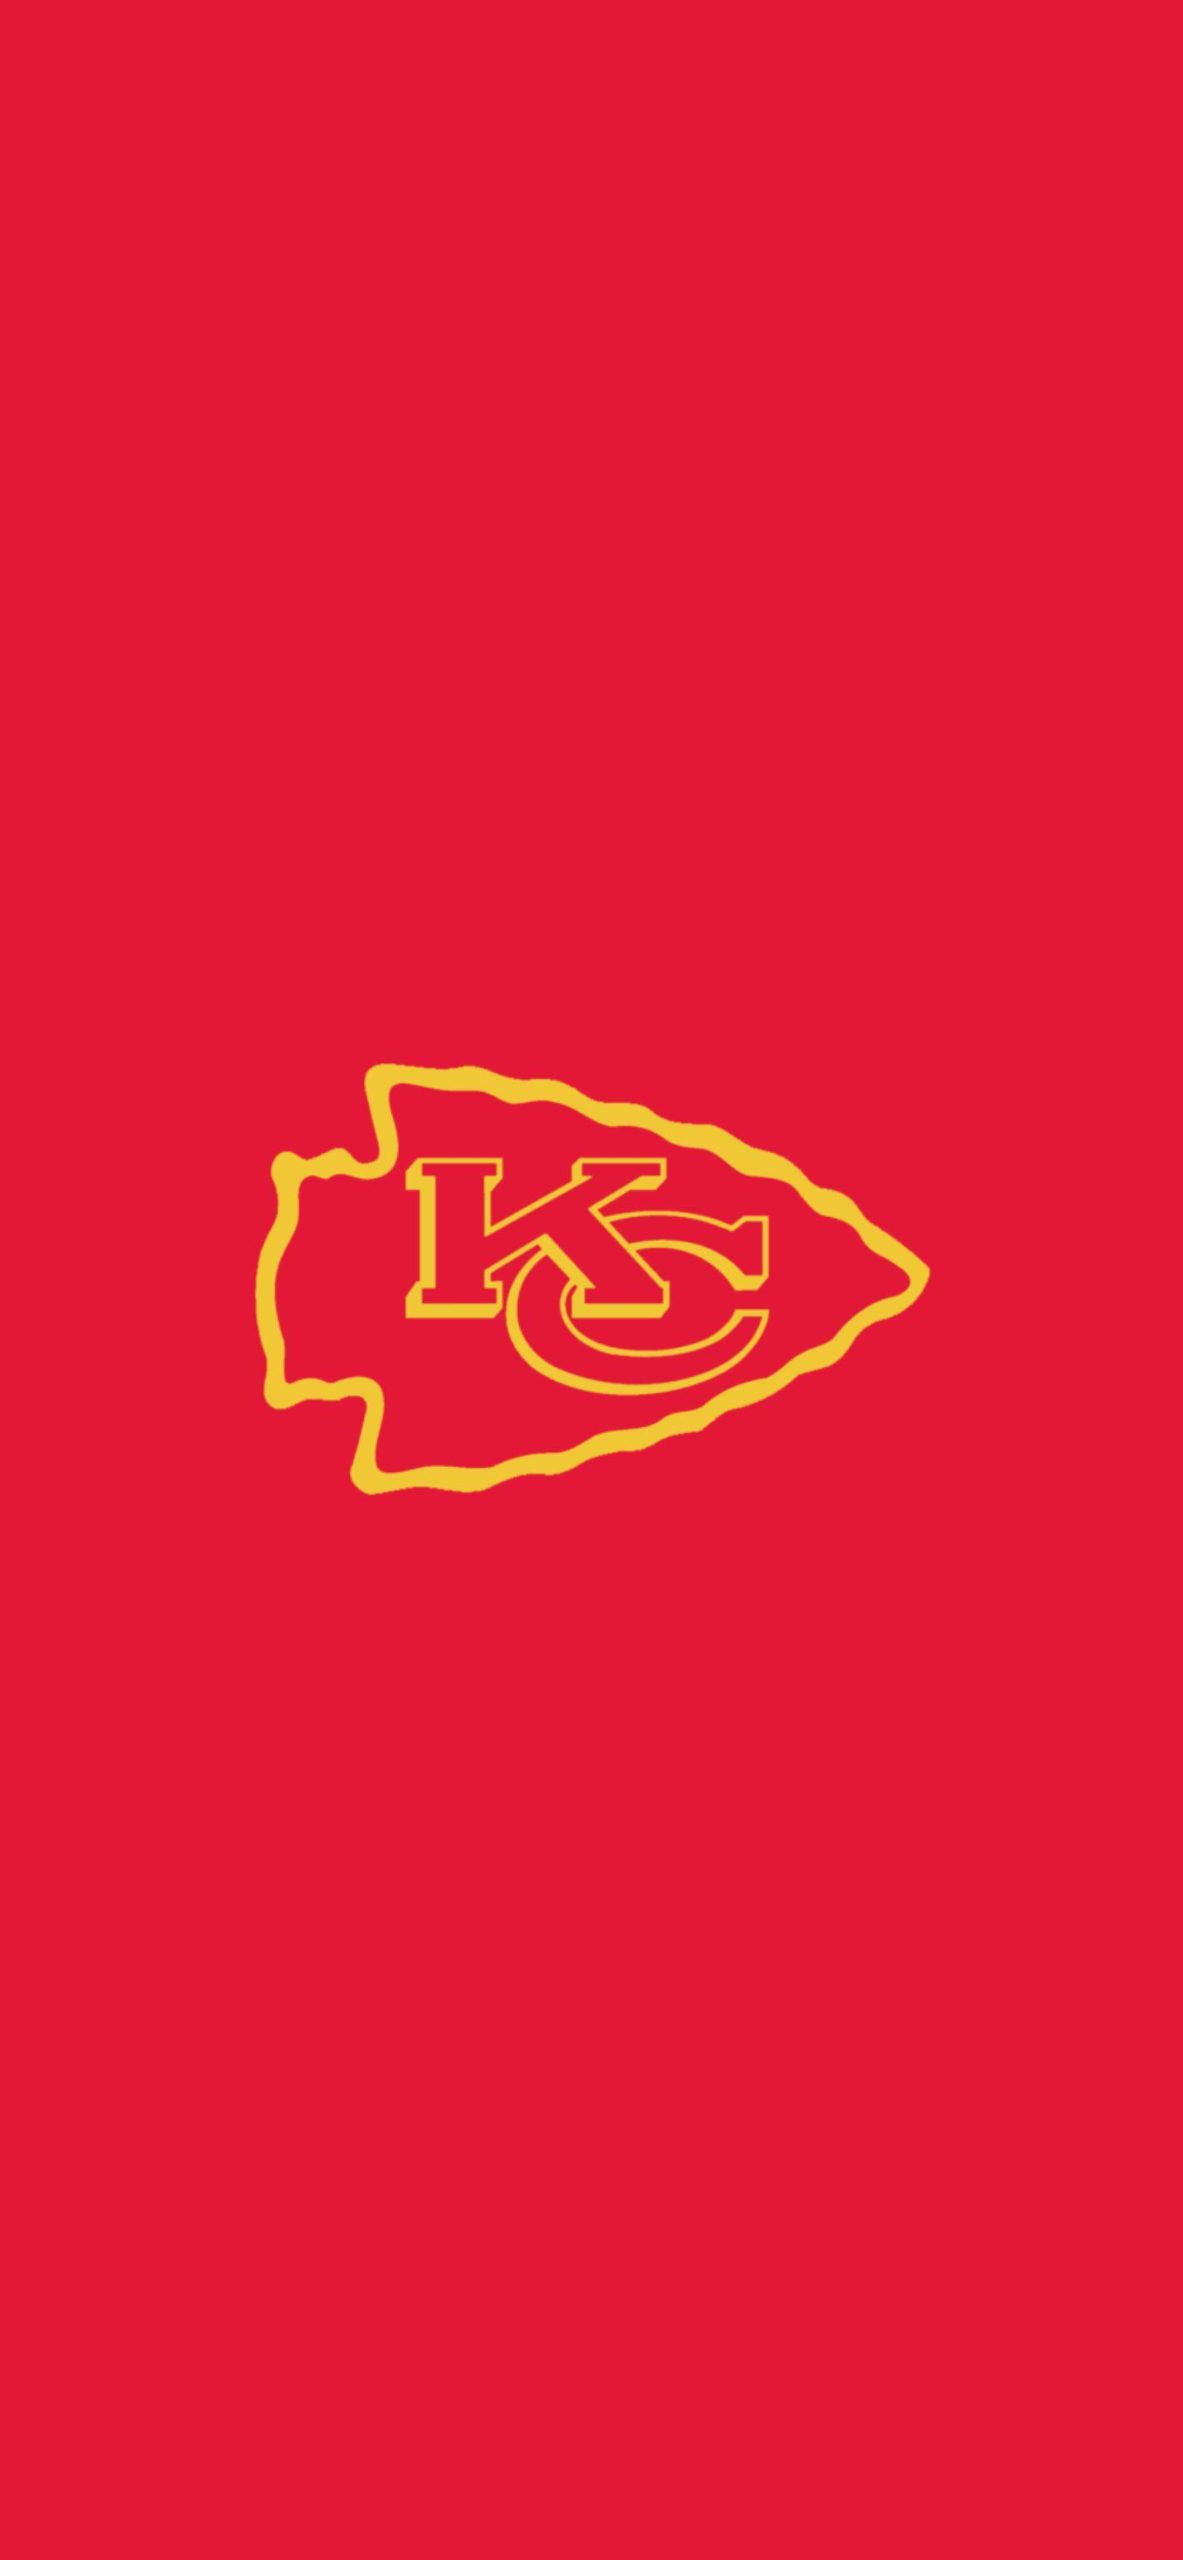 Kansas City Chiefs iPhone Free 4K Wallpapers, Kansas City Chiefs iPhone, Sports